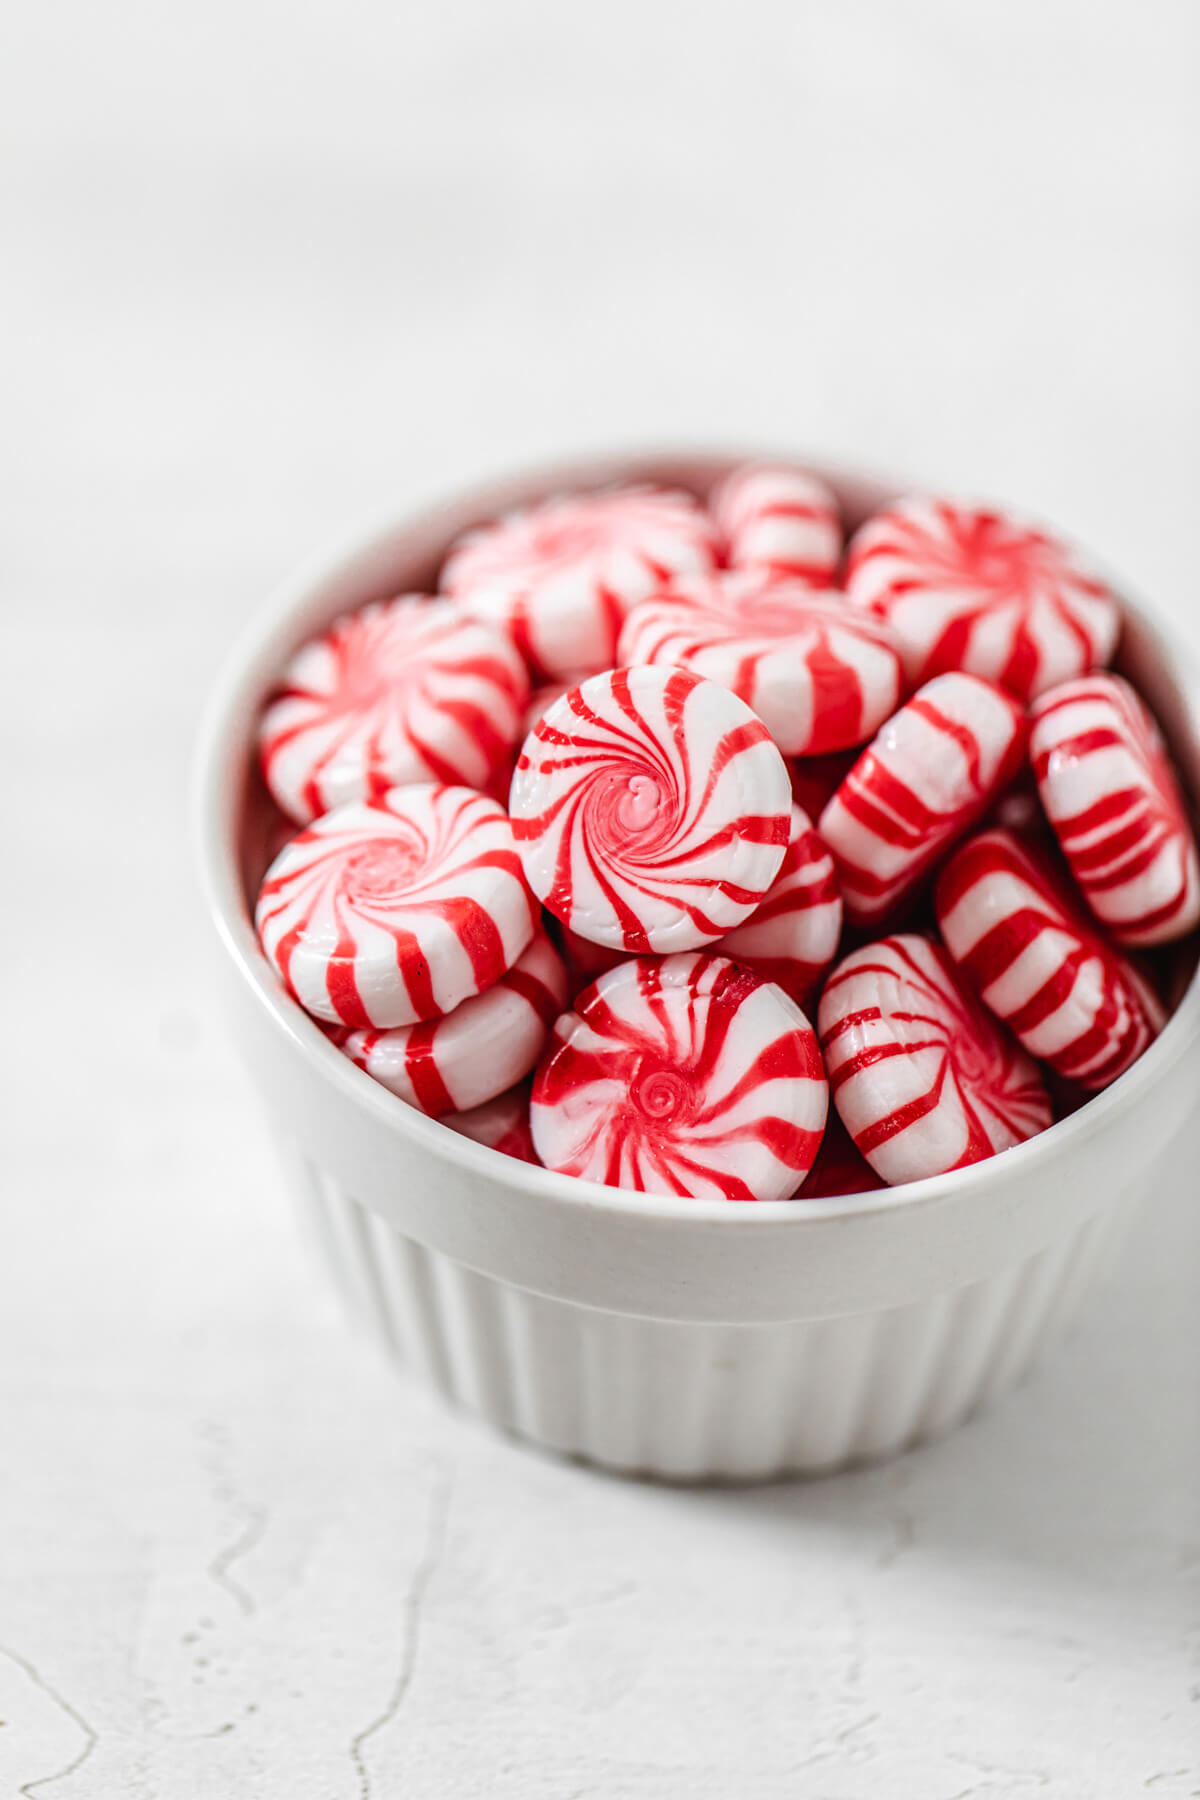 peppermint candies in a white ramekin